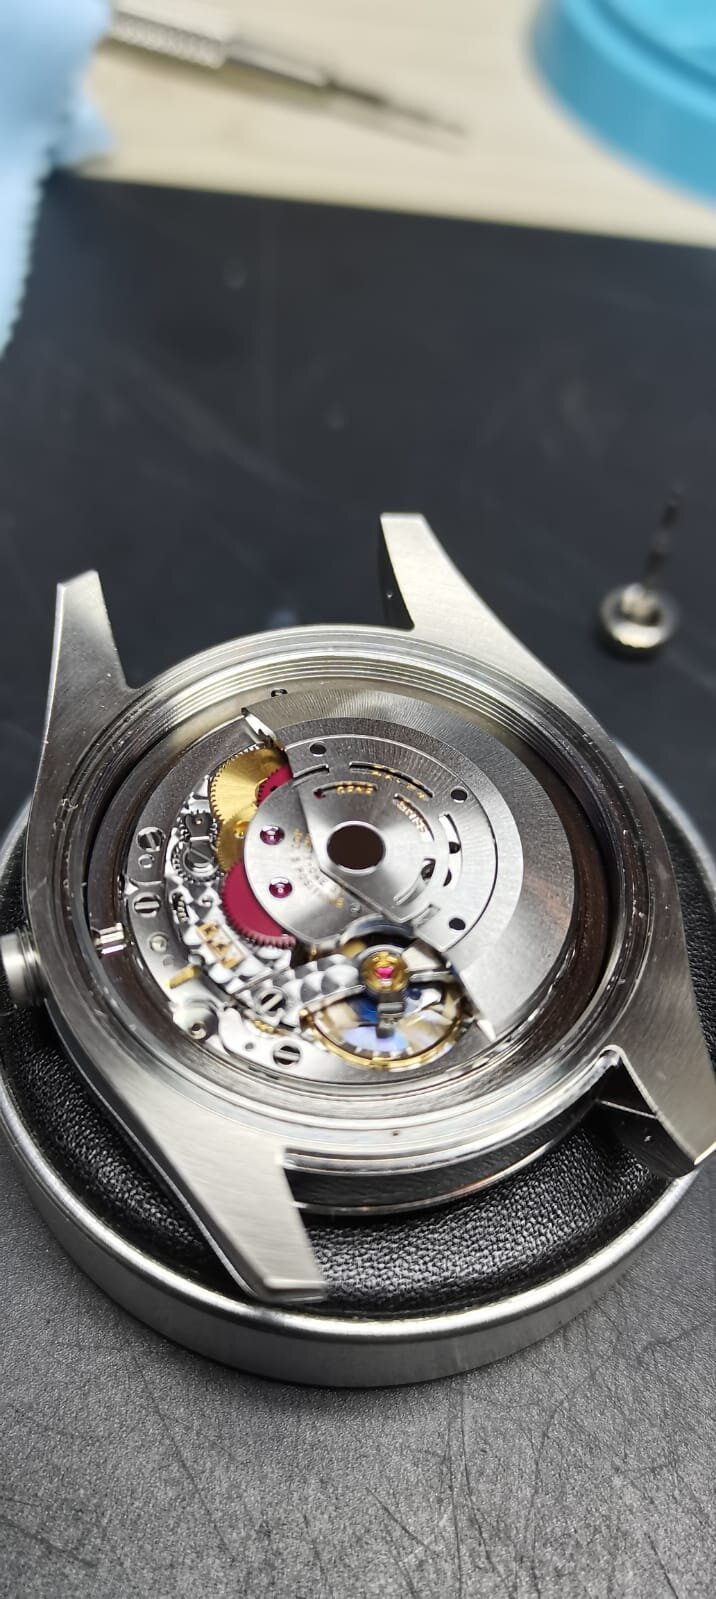 Rolex watch repair servicing new glass polishing cleaning overhaul.jpeg